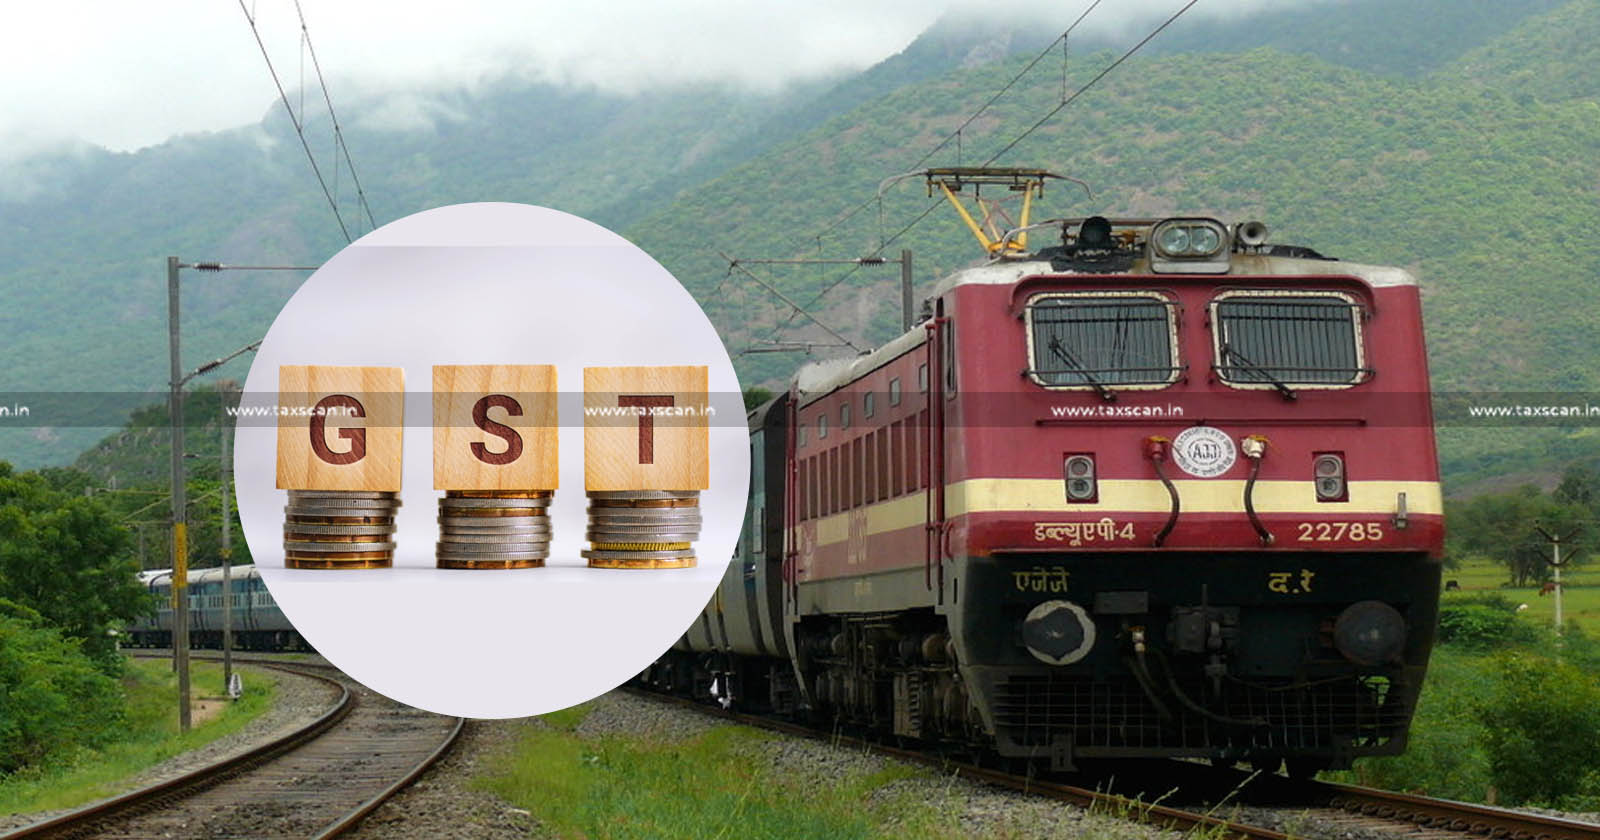 Railway as Scraps Supplier Wrongly Deposited - GST in different GSTN - Madhya Pradesh High Court - Railway to Refund - Partnership Firm - taxscan